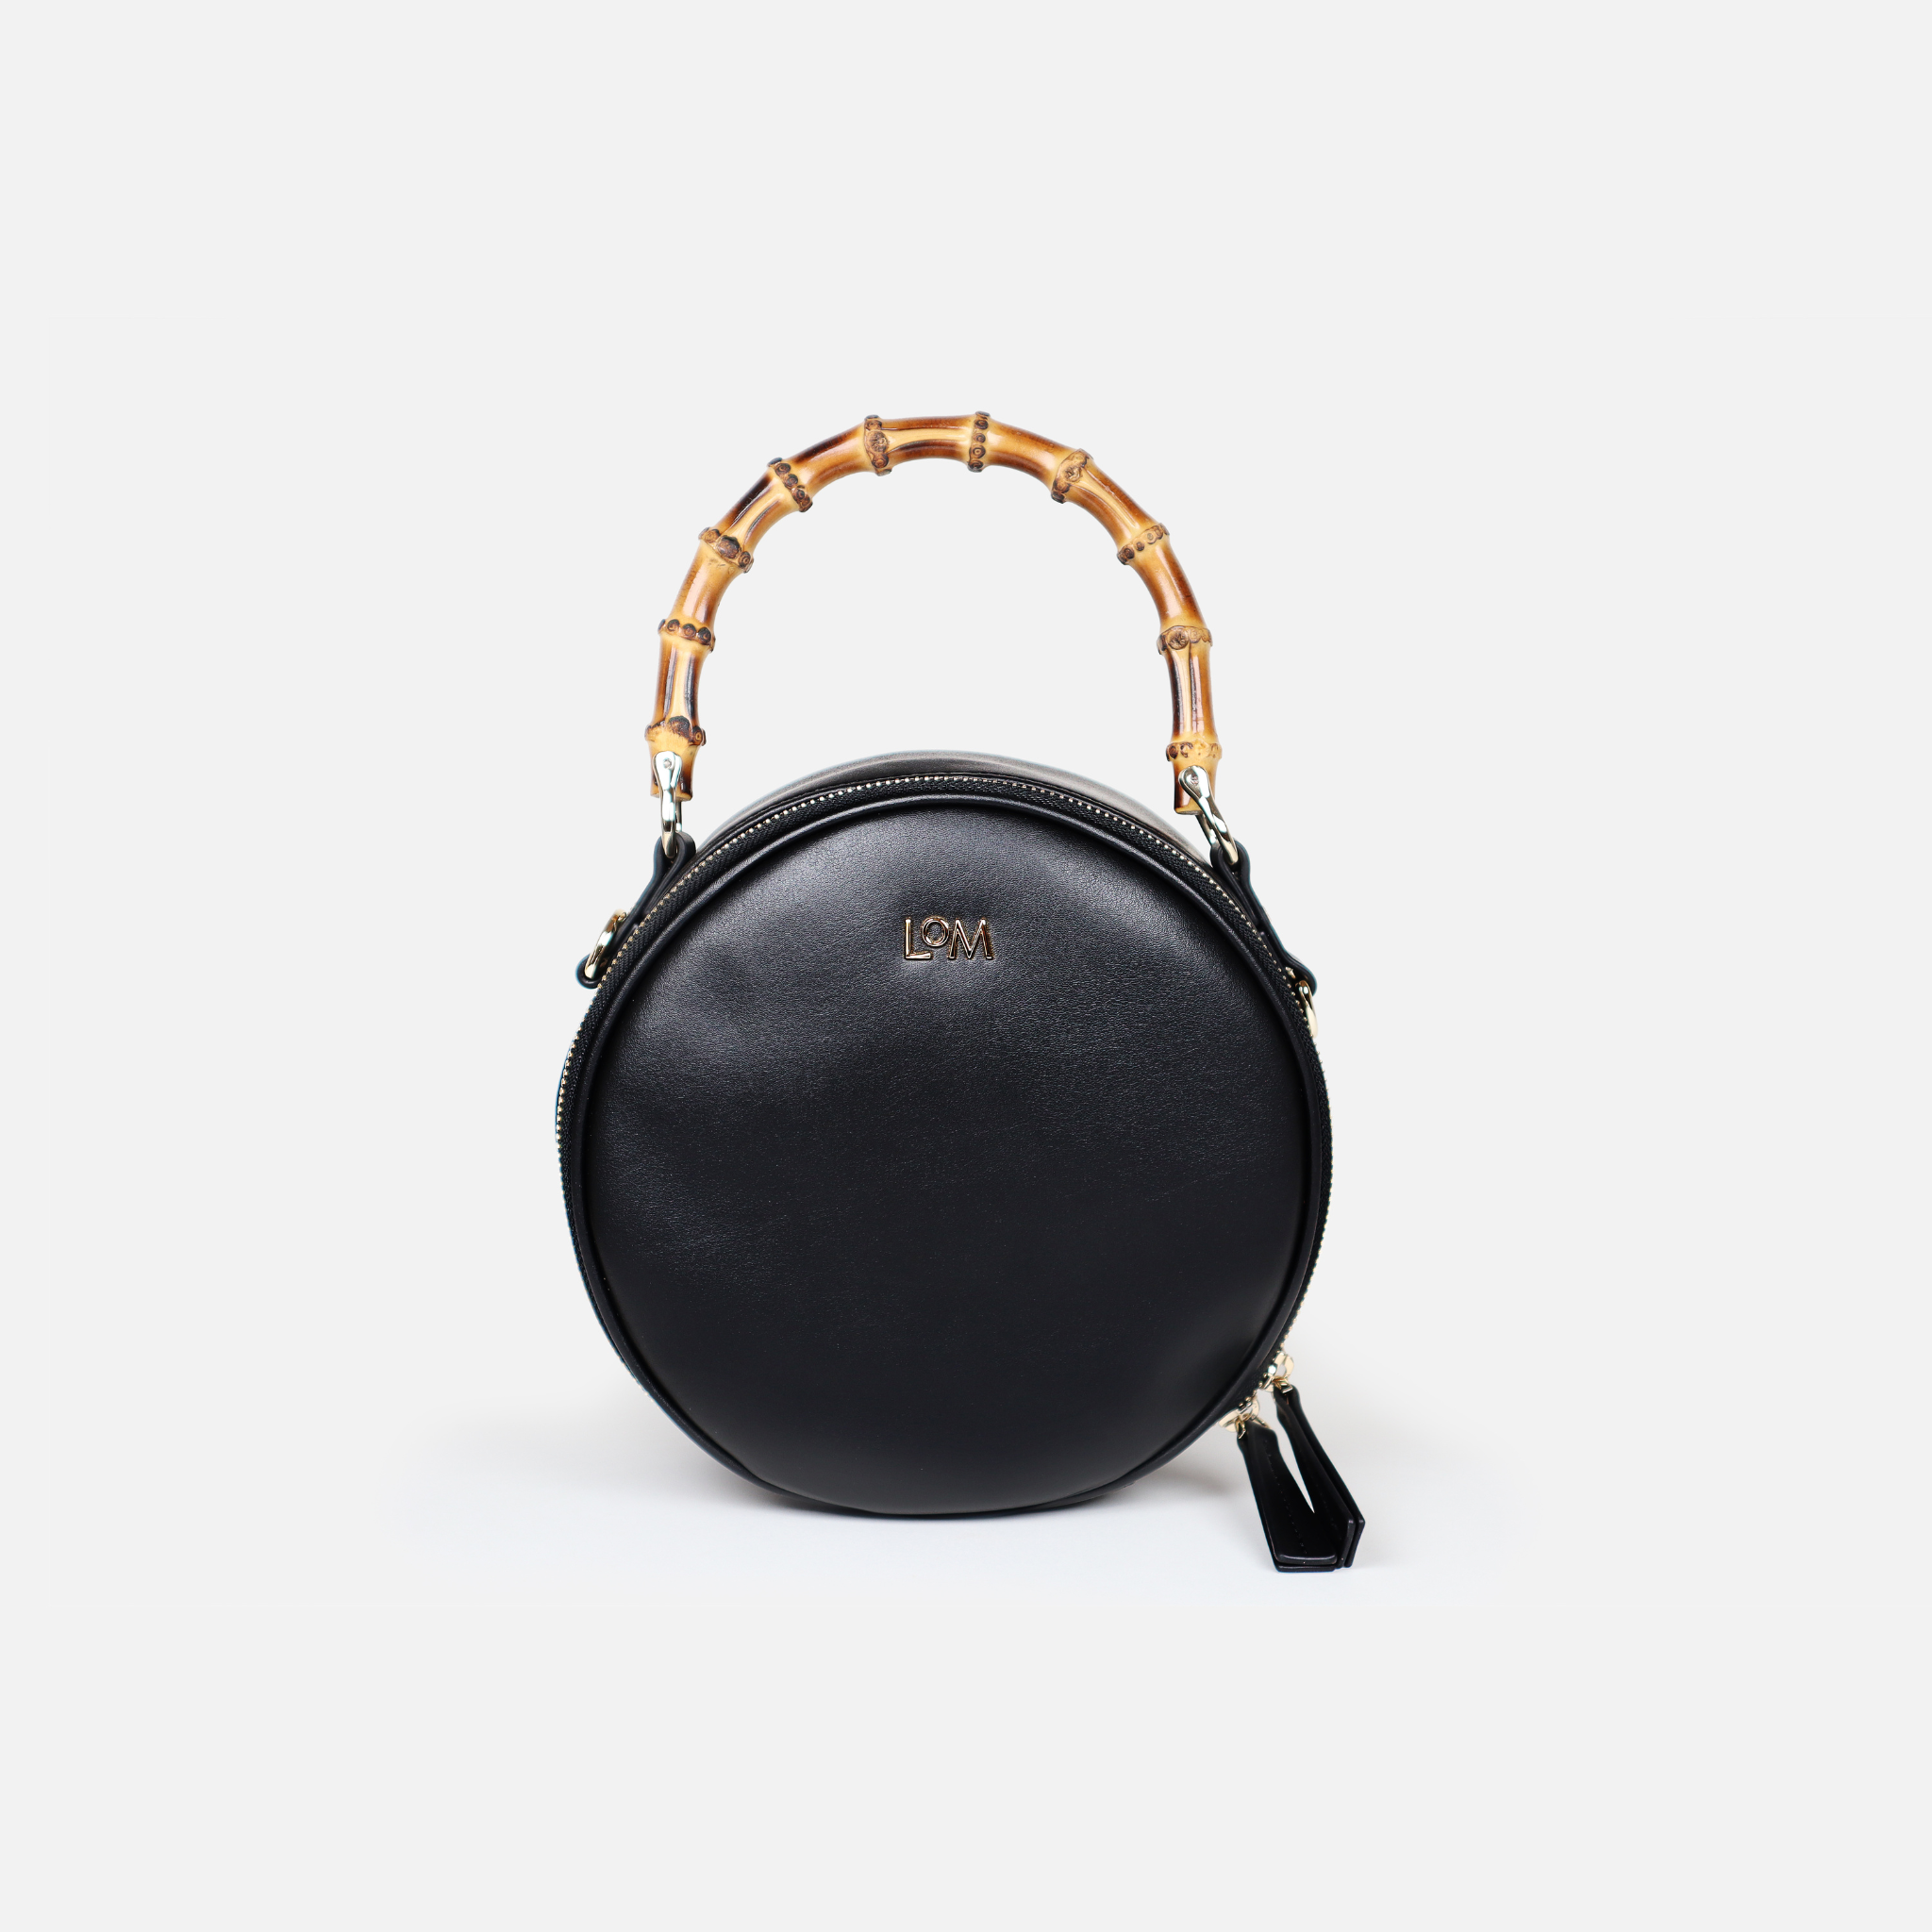 Circular handbag with bamboo handle. Made from premium black cactus leather, light gold hardware, black organic cotton lining.